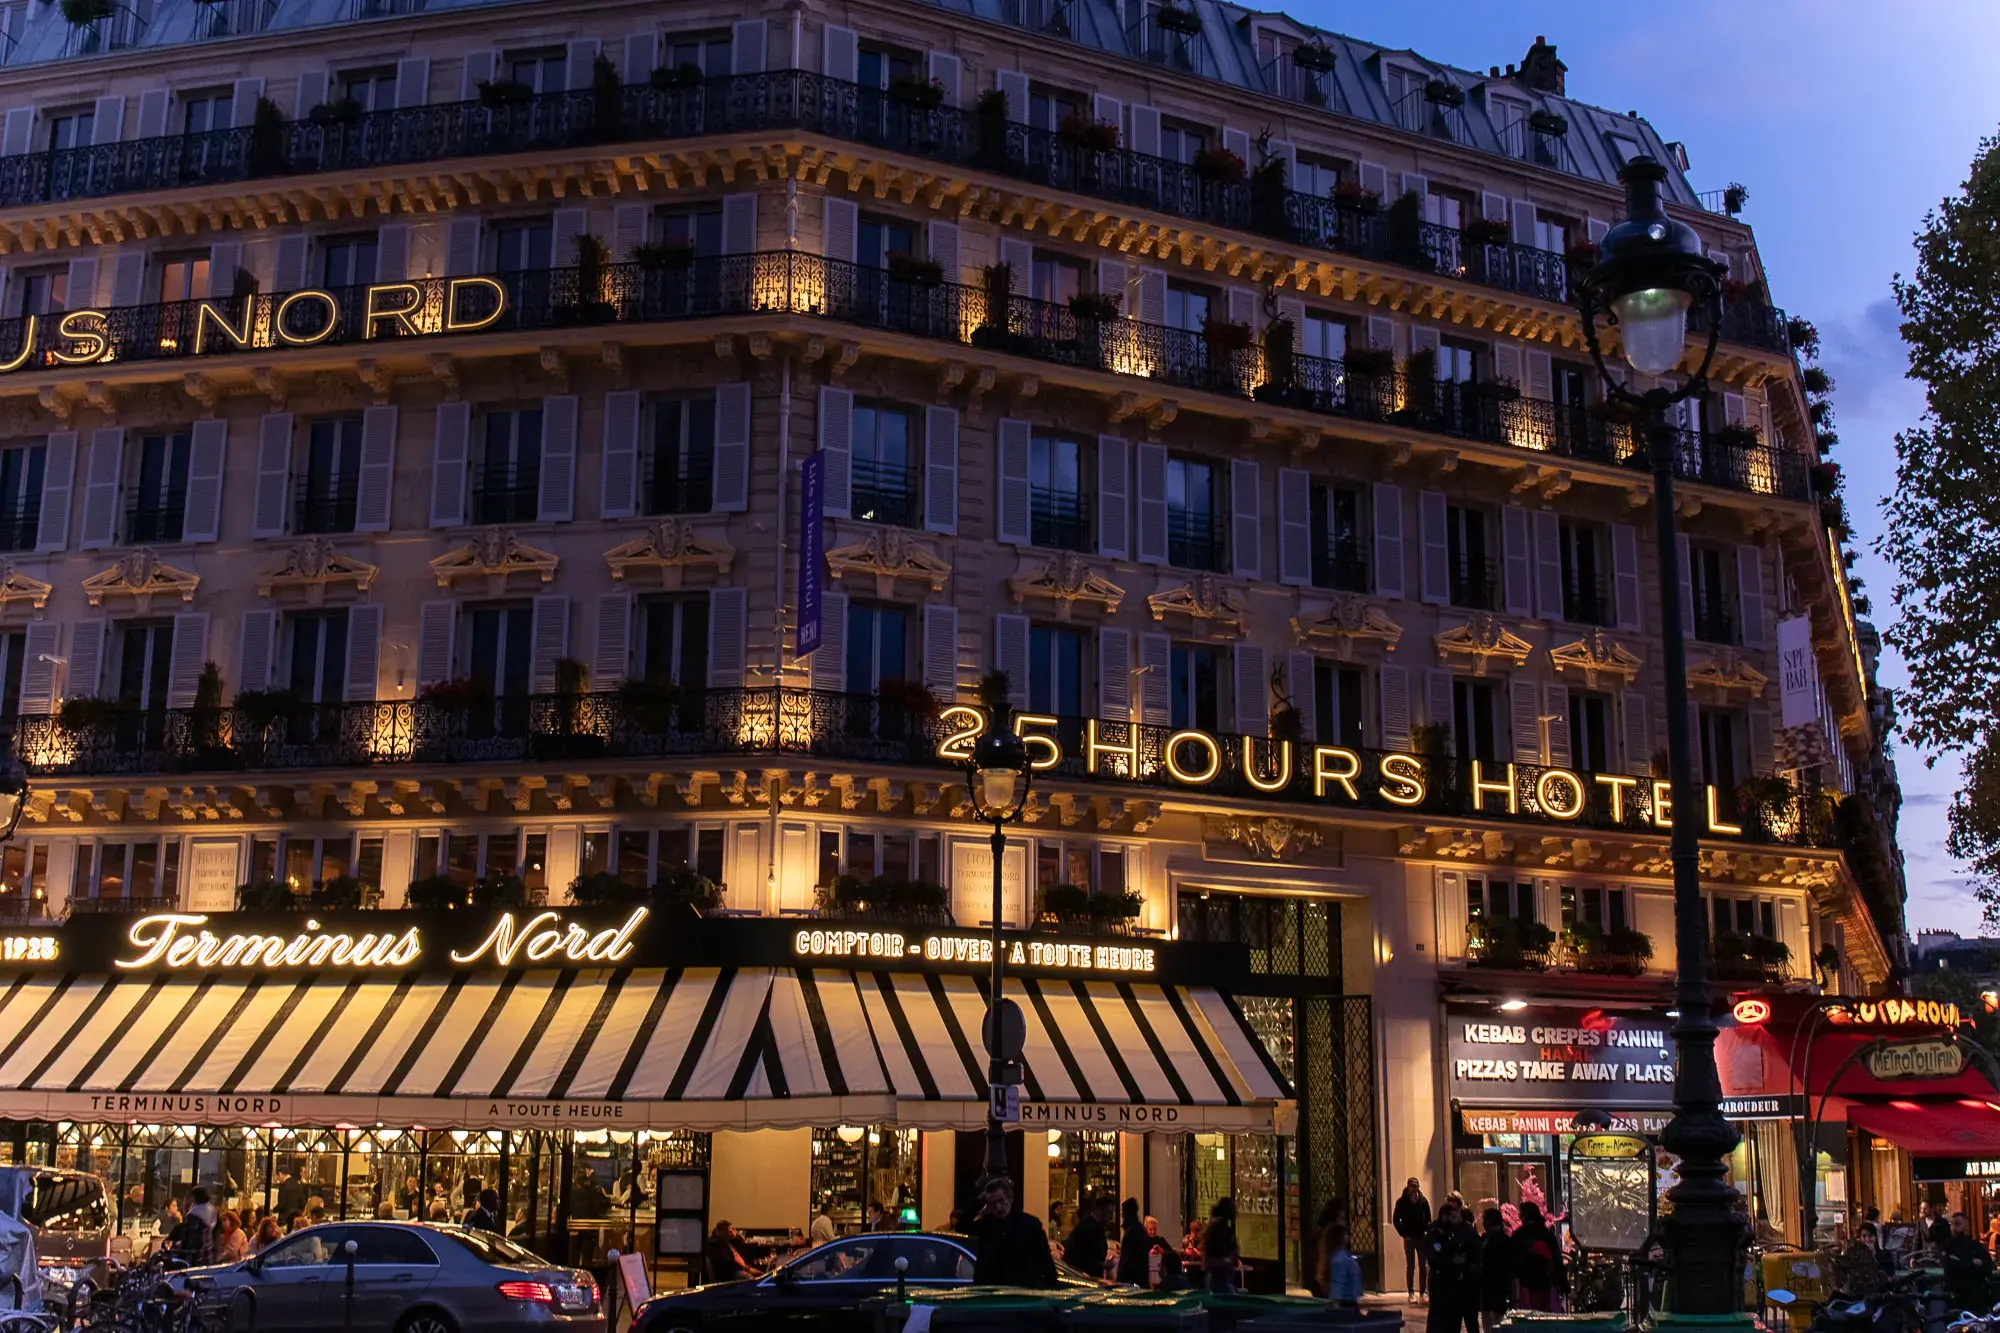 25hours-hotel-paris-front-night